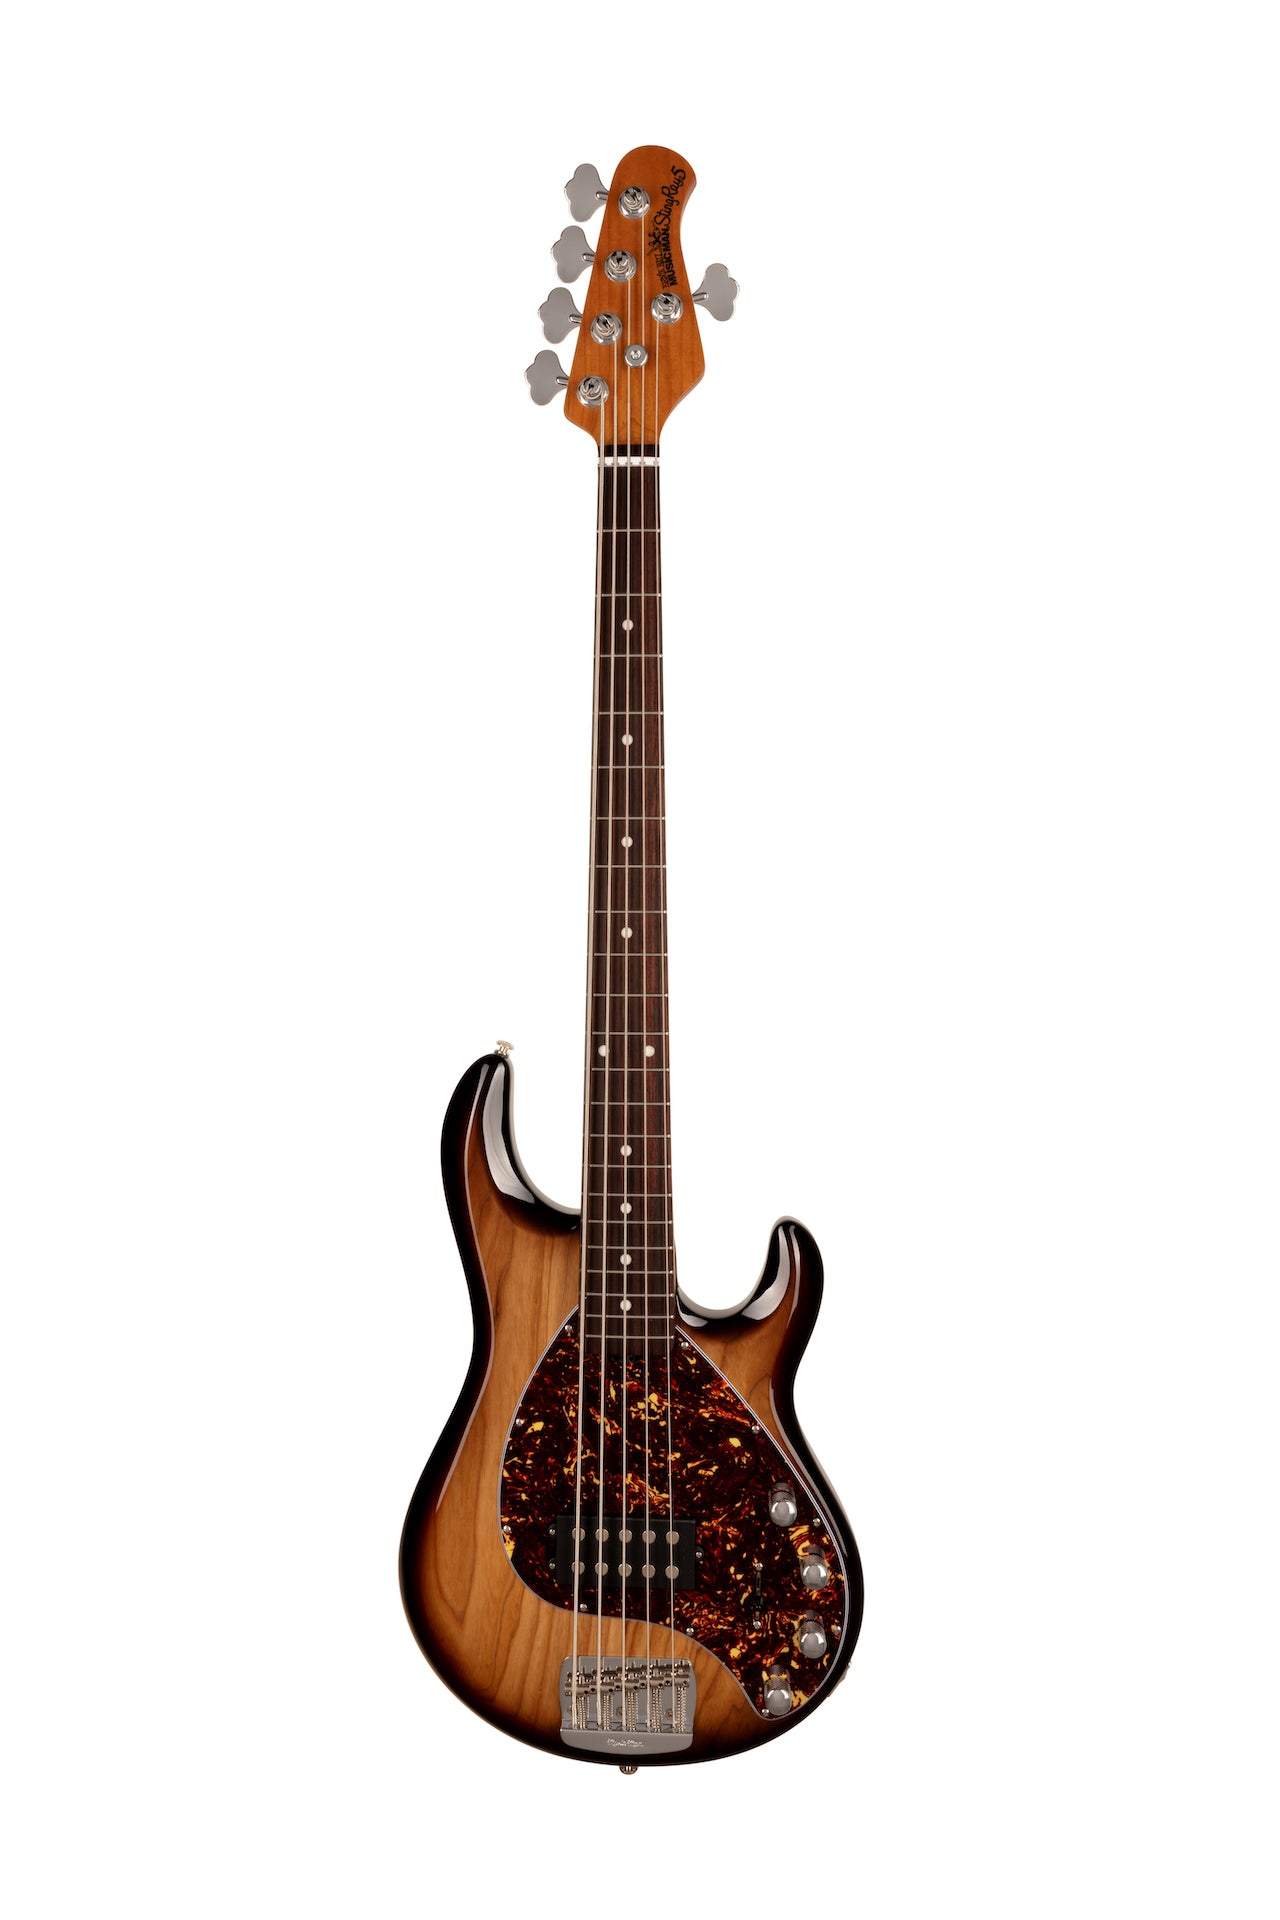 Ernie Ball Music Man StingRay Special 5 Bass Guitar - Burnt Ends with Rosewood Fingerboard F95728 - HIENDGUITAR   Musicman bass